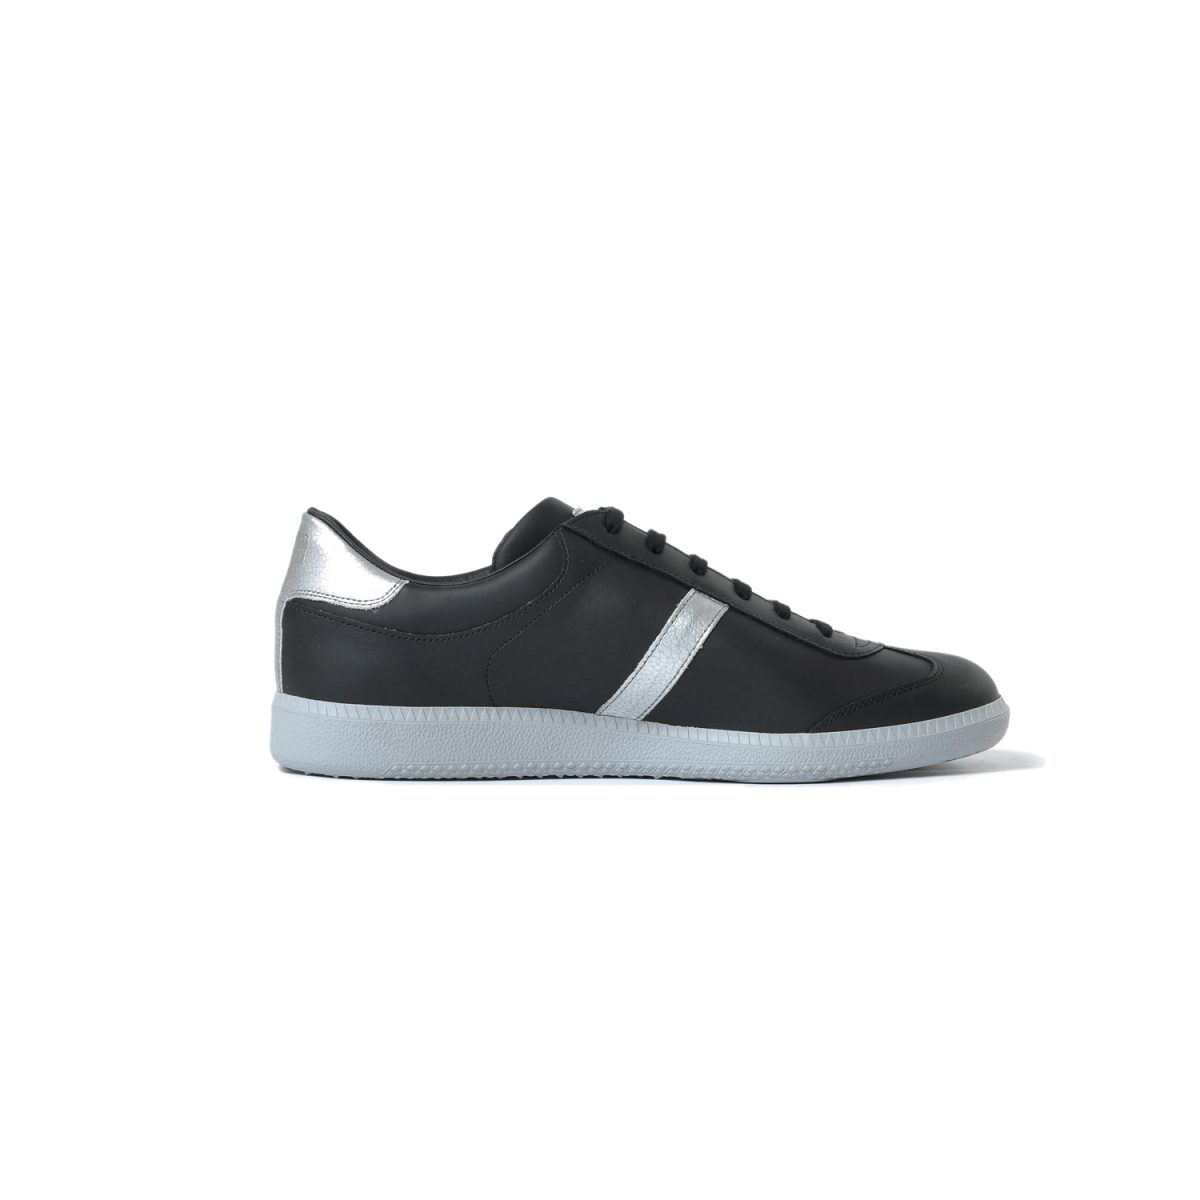 Tisza shoes - Compakt - Black-silver